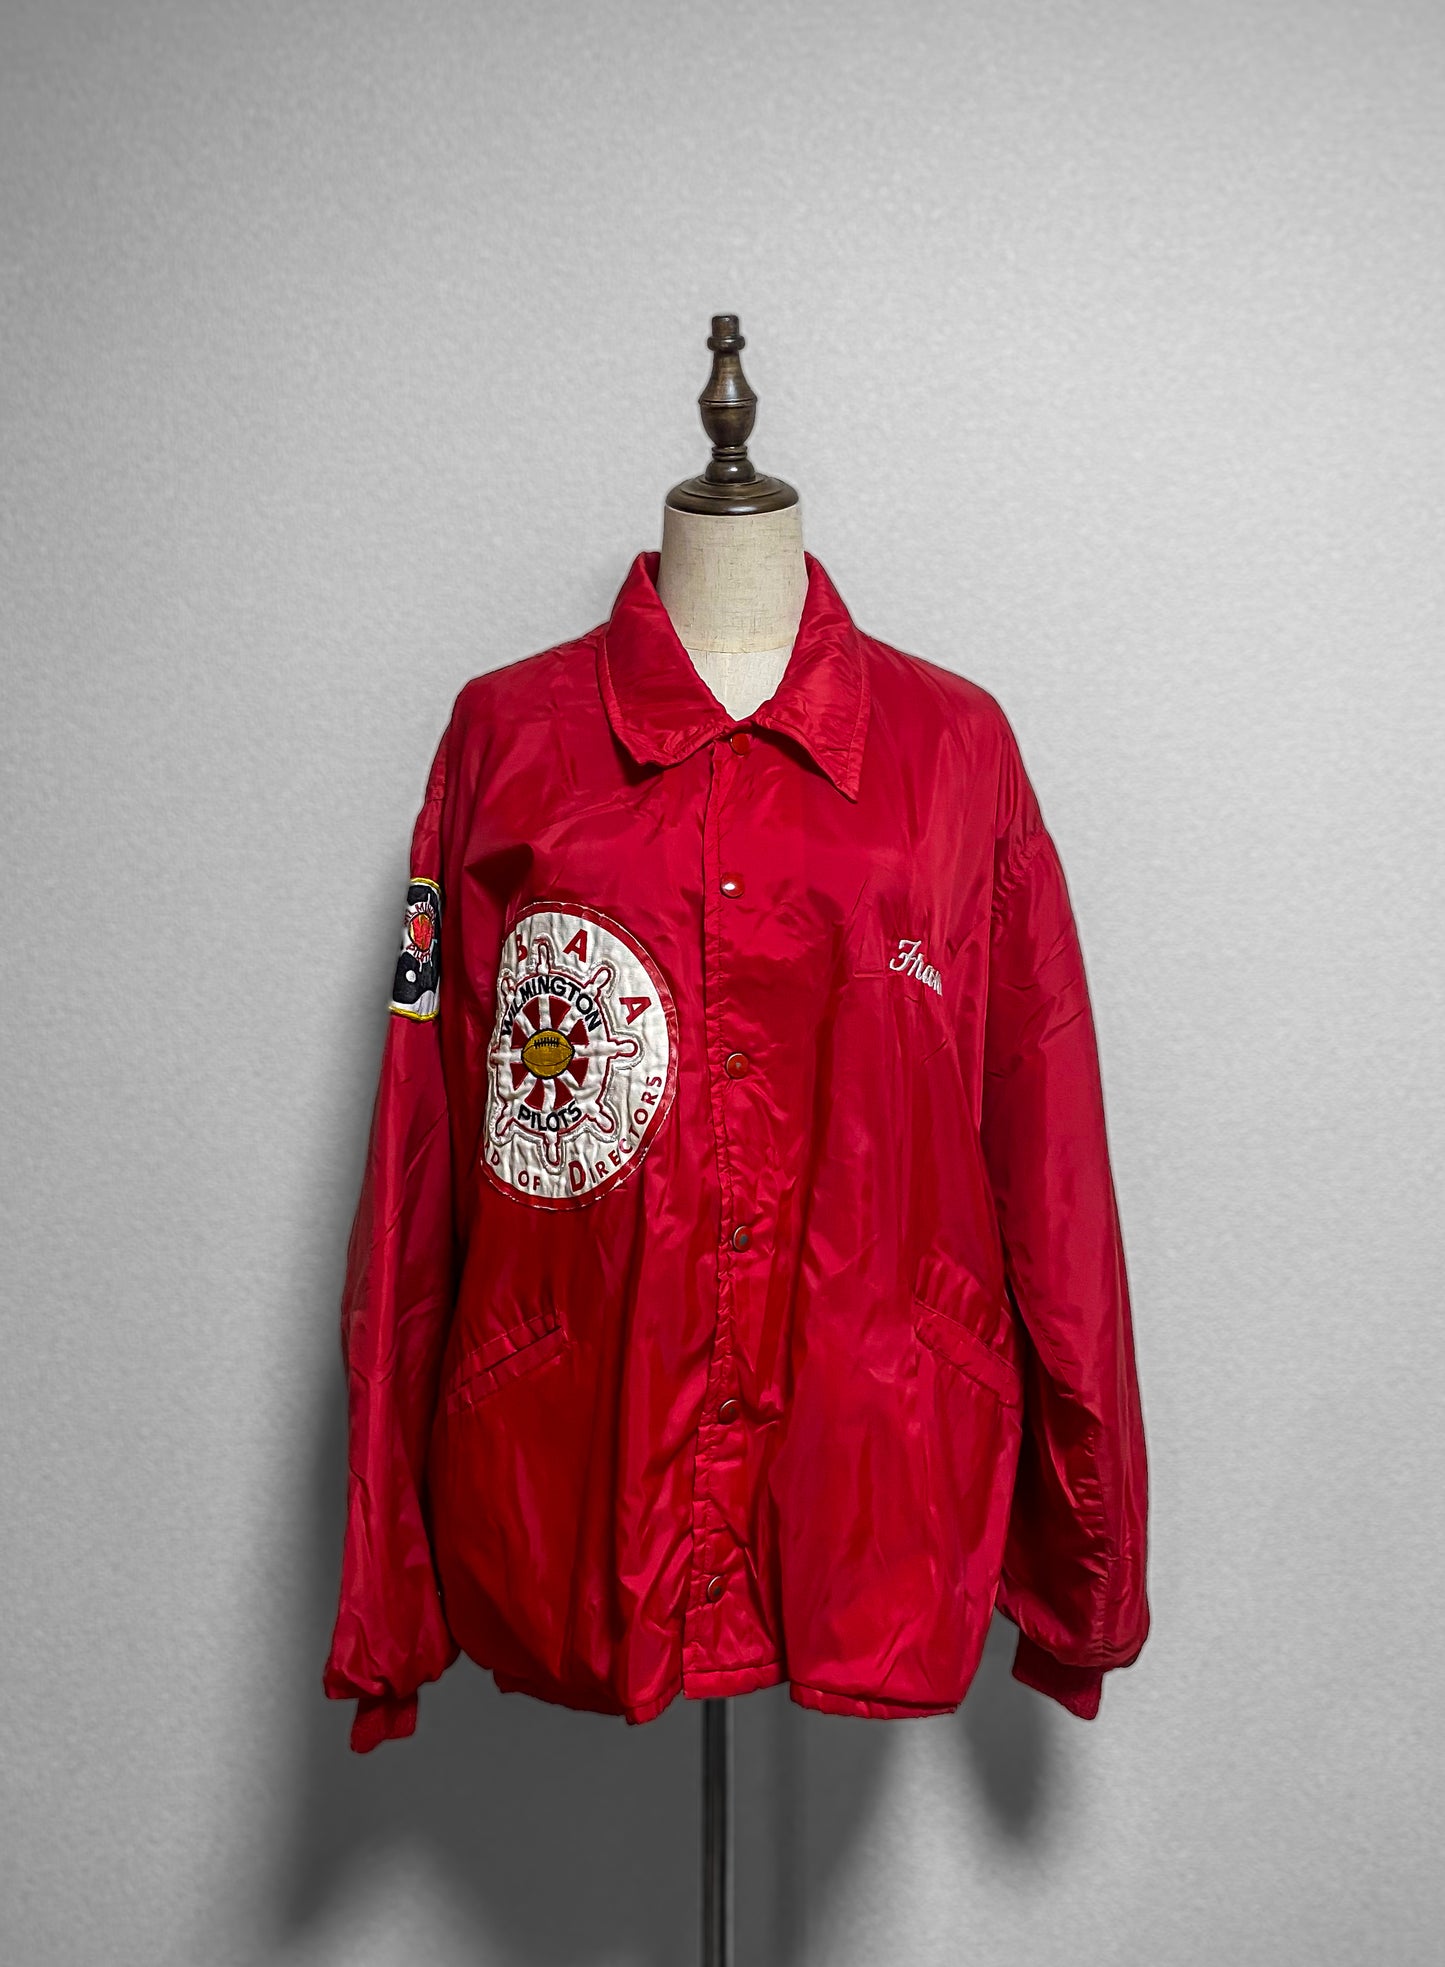 RED Coach Jacket vintage 70s